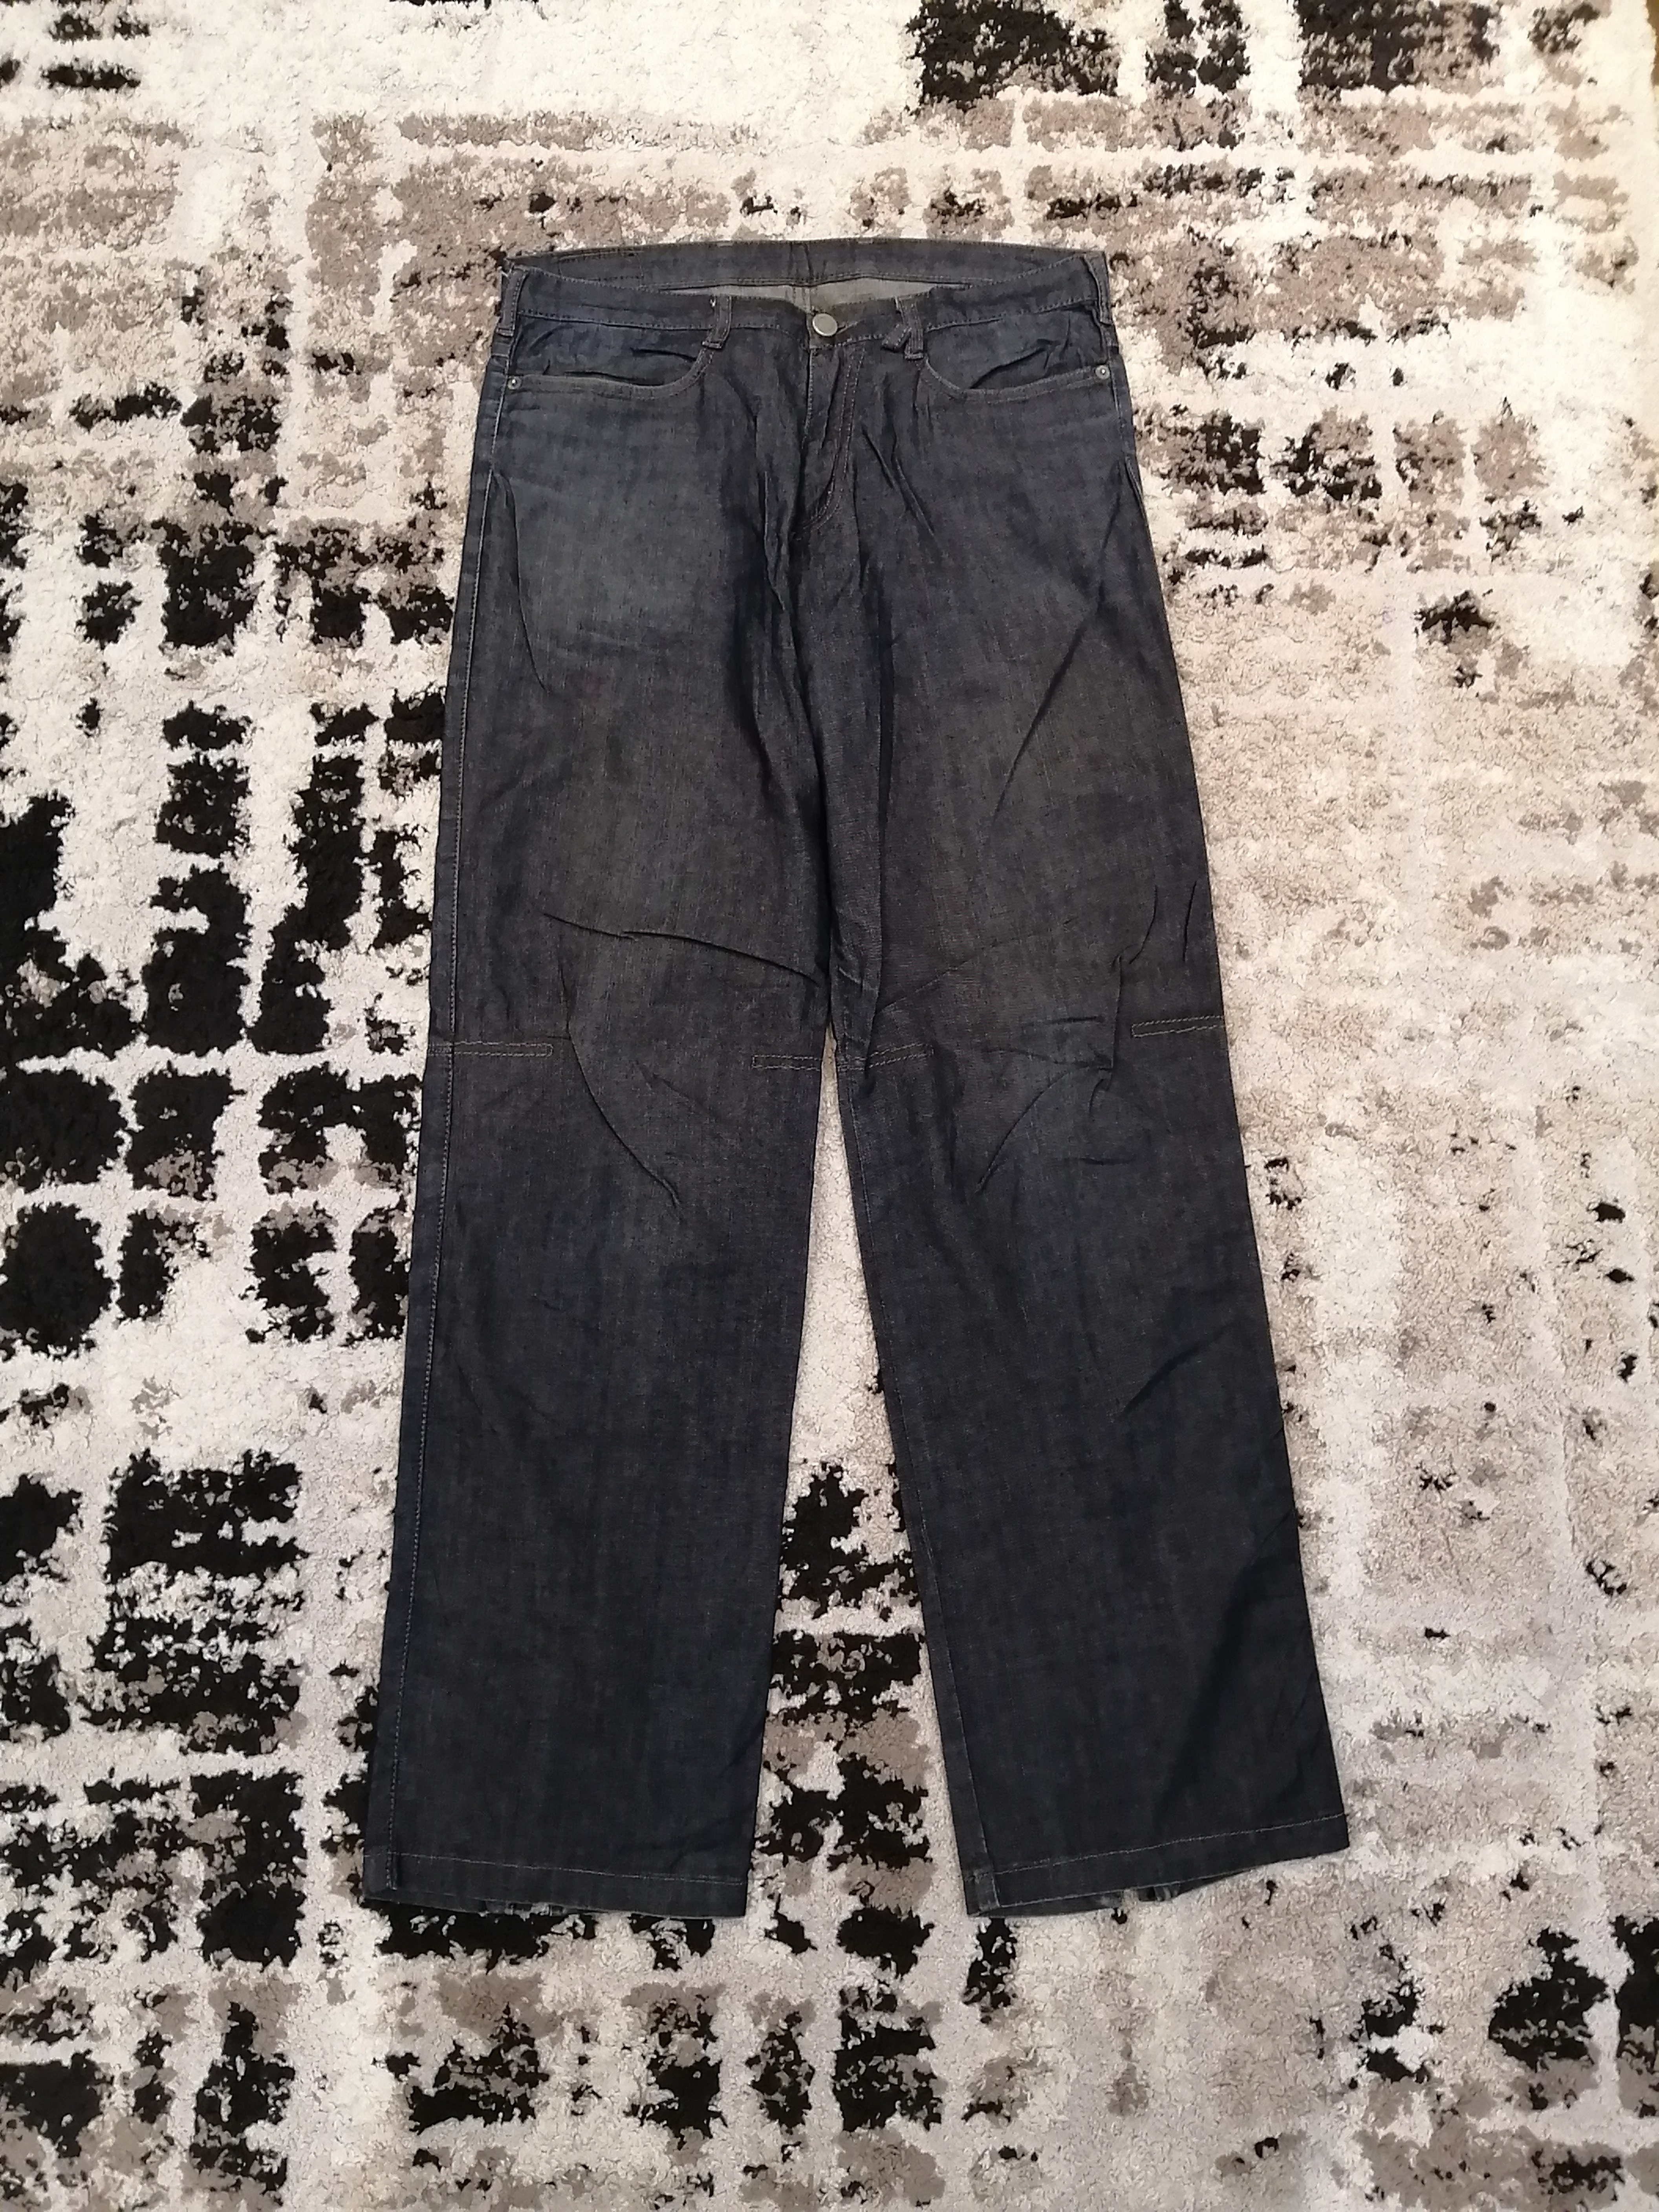 Vintage Neil Barrett Zipper Jeans - 17